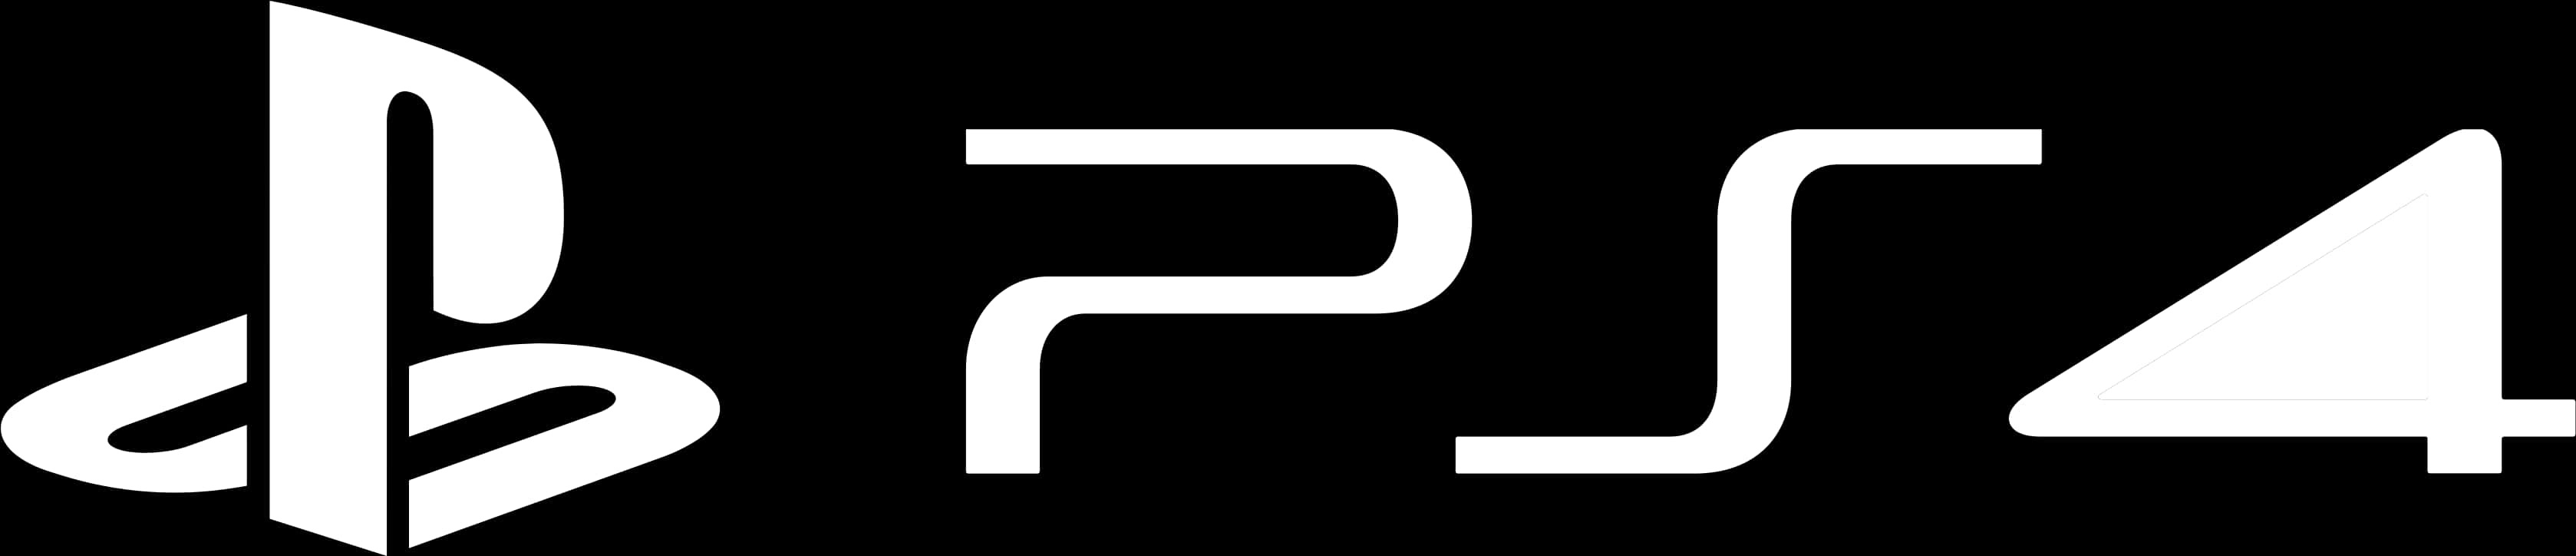 Play Station P S4 Logo Blackand White